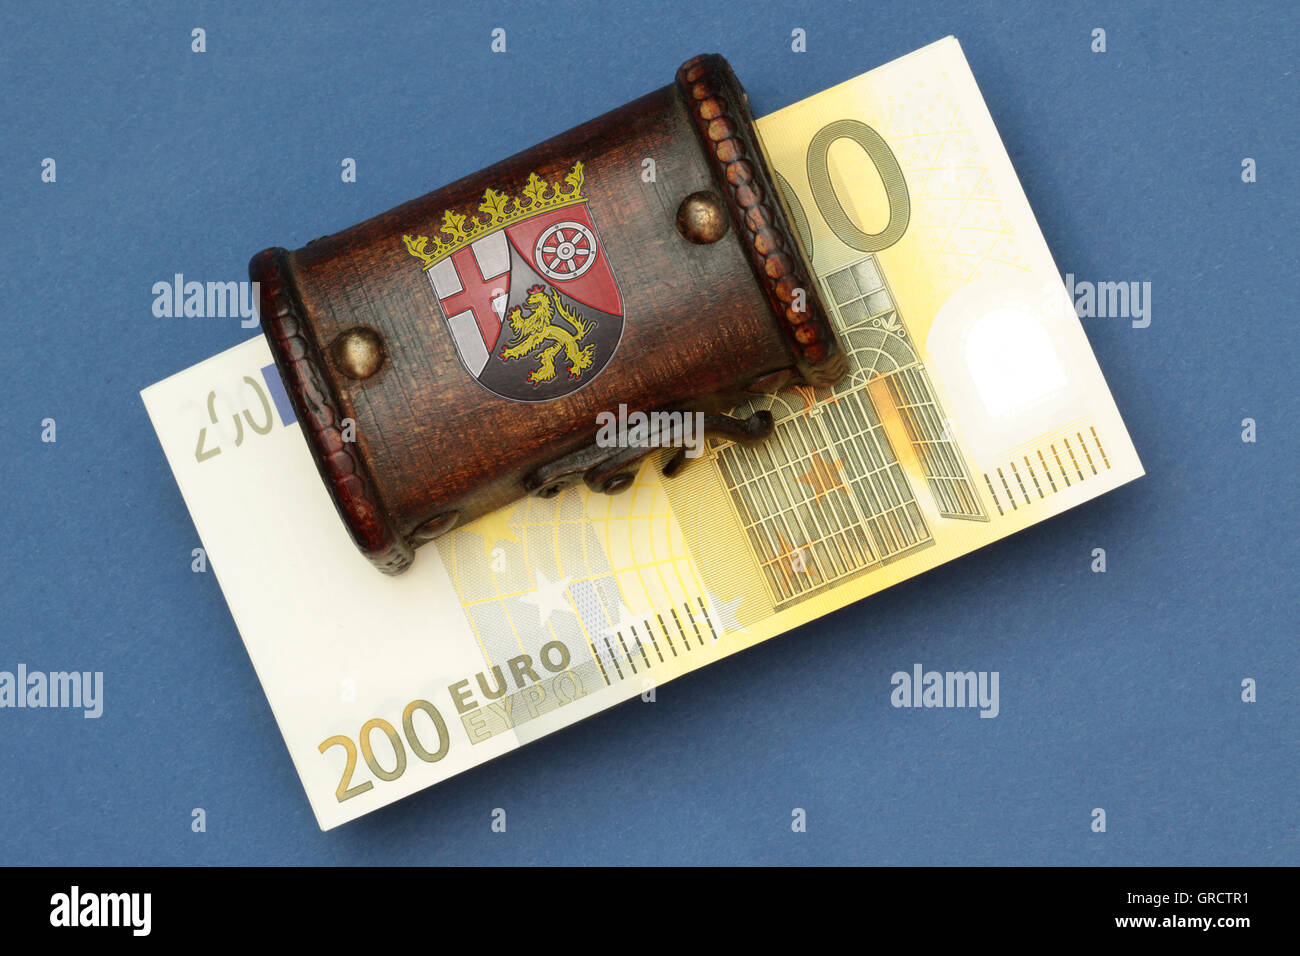 Treasure Chest With Seal Of State Rheinland Pfalz And Euro Bills Stock Photo